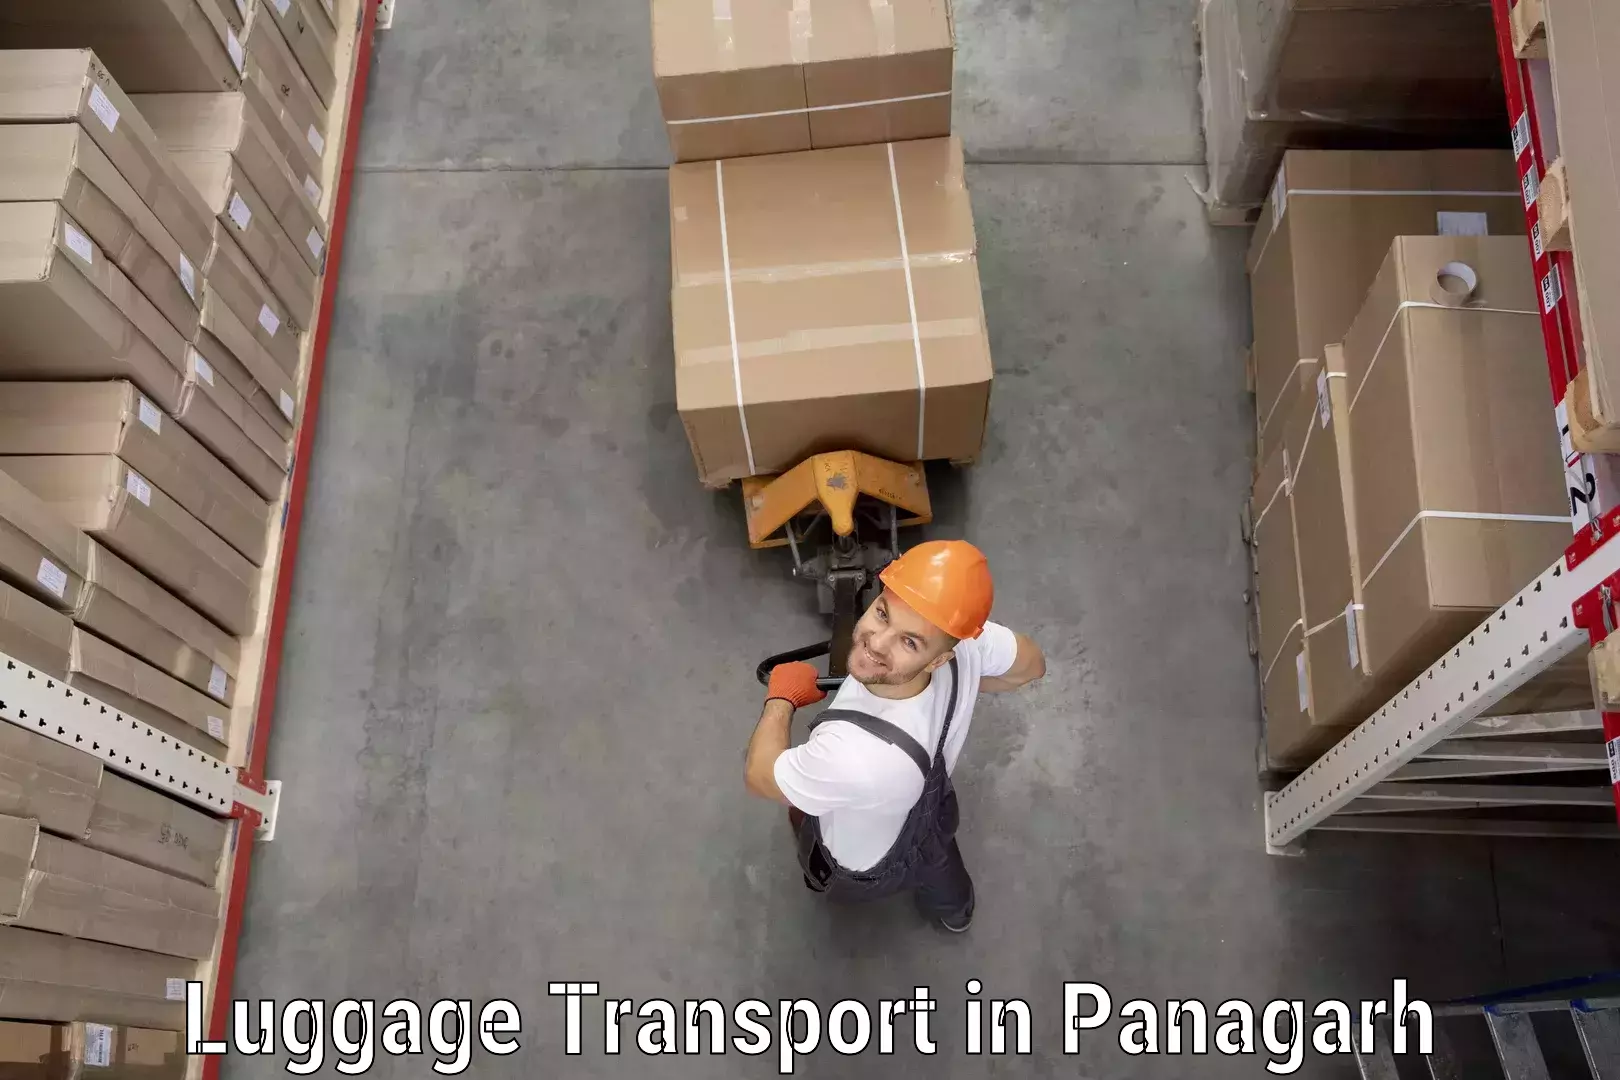 Baggage transport estimate in Panagarh